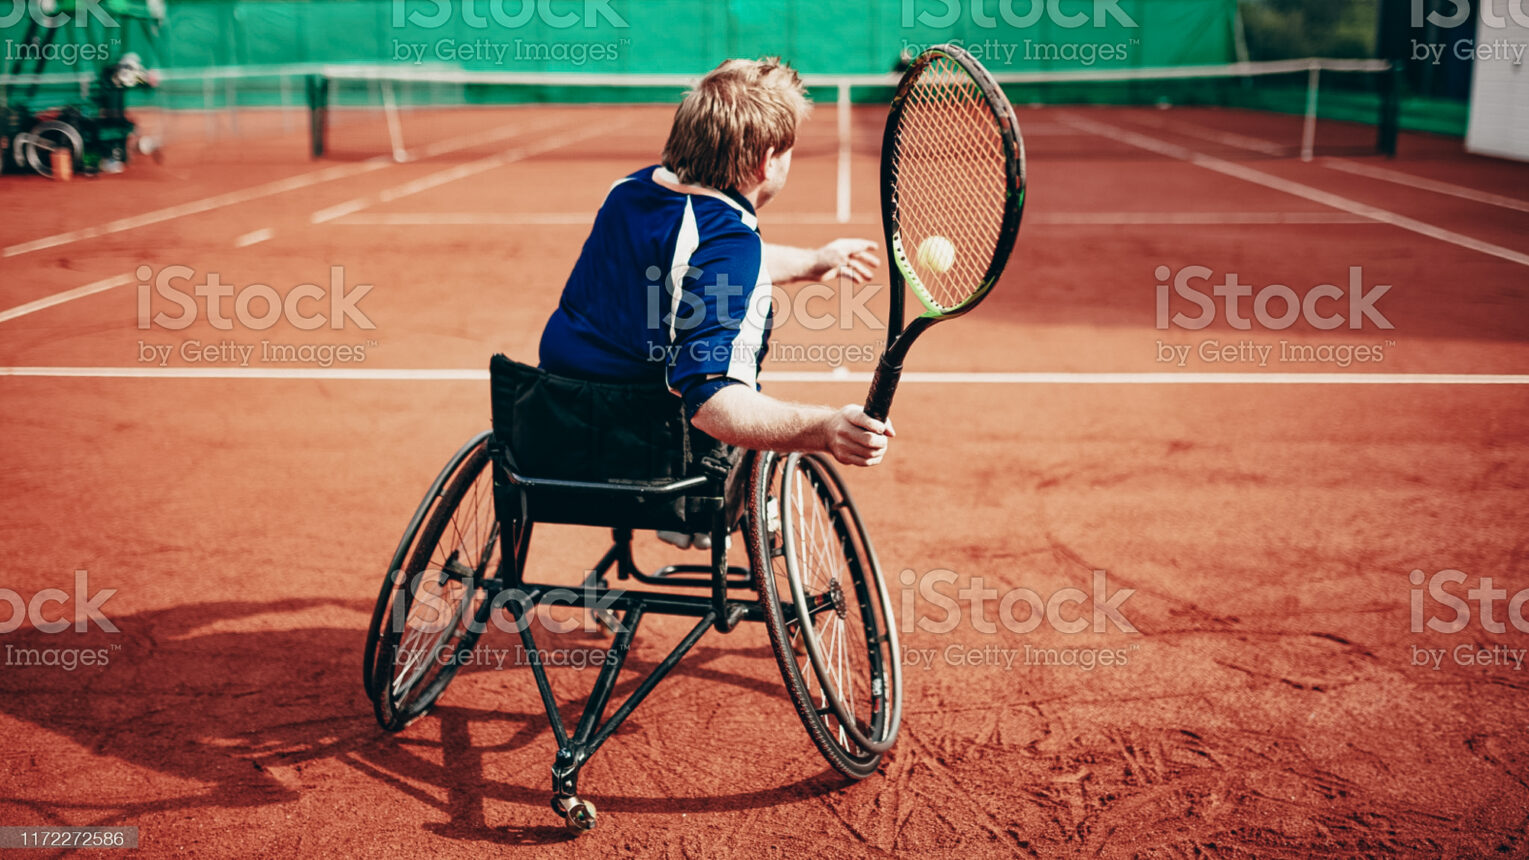 Bild - En rullstolsburen man spelar tennis